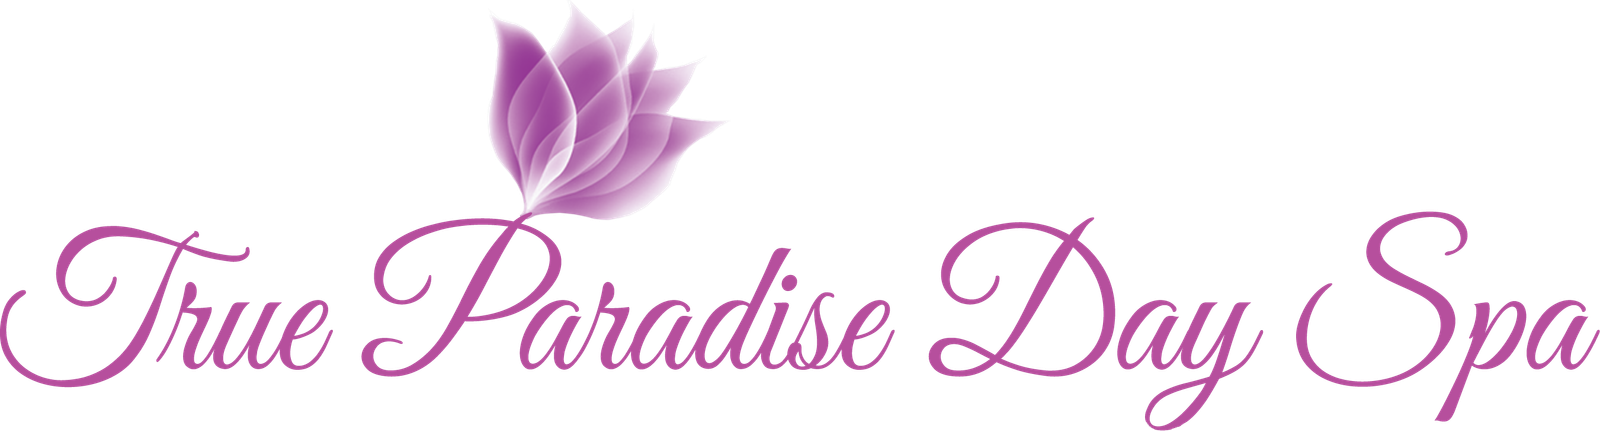 True Paradise Day Spa in Vellore, Hosur, Tiruvannamalai